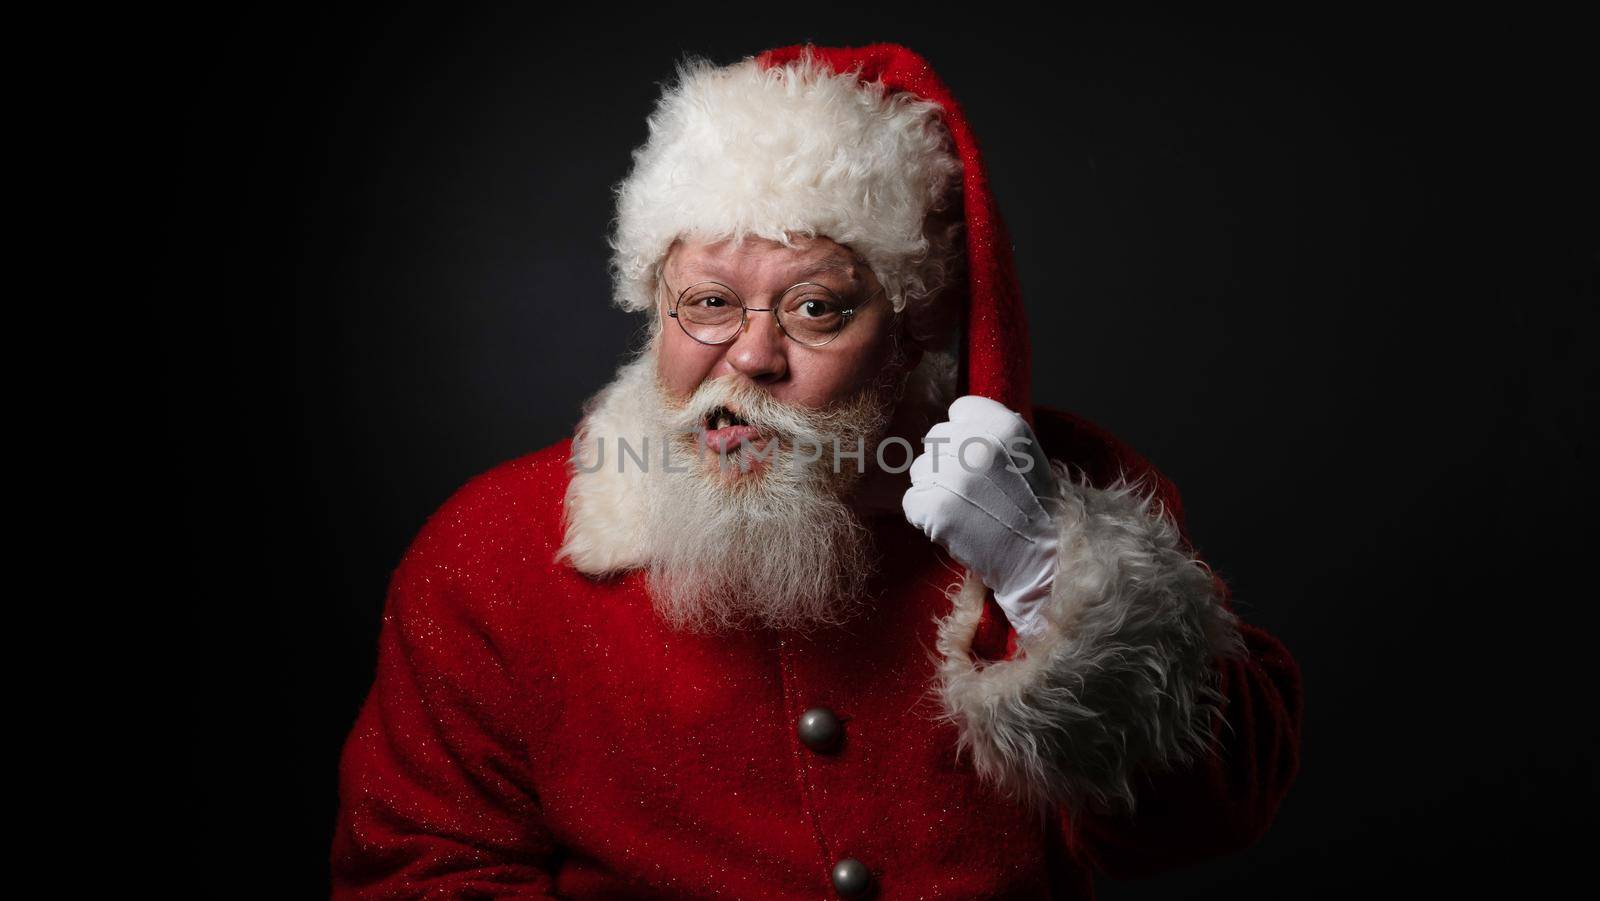 Bad Santa threatening fist by ALotOfPeople